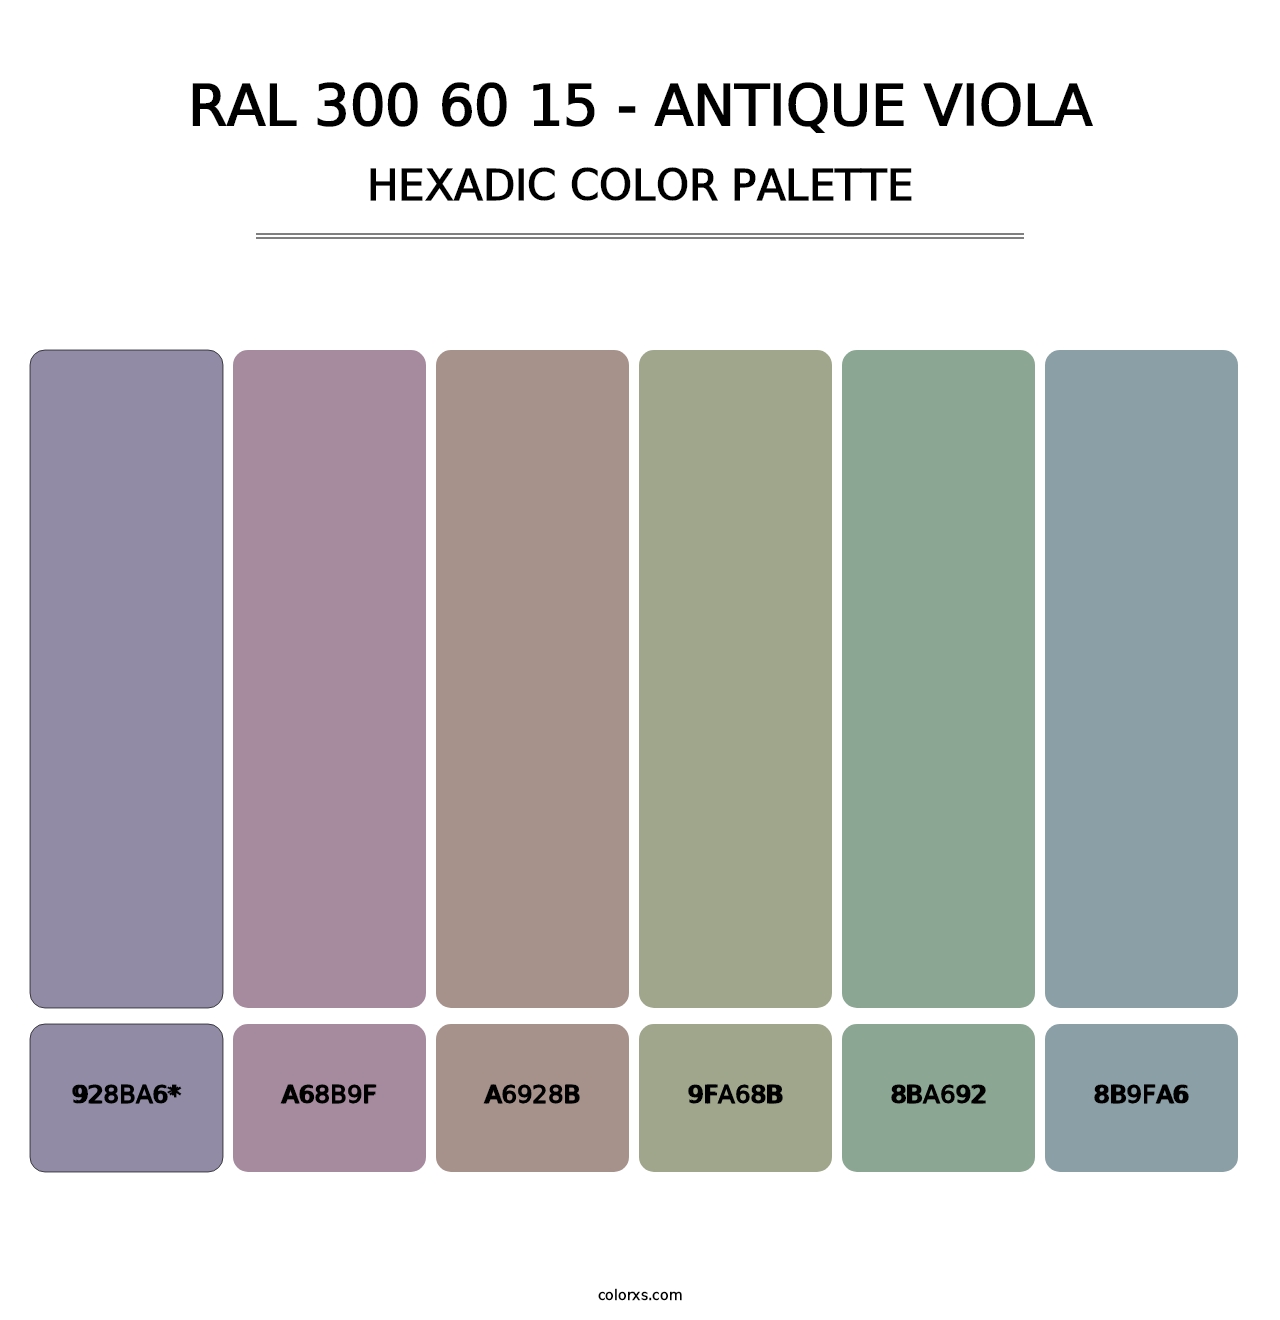 RAL 300 60 15 - Antique Viola - Hexadic Color Palette